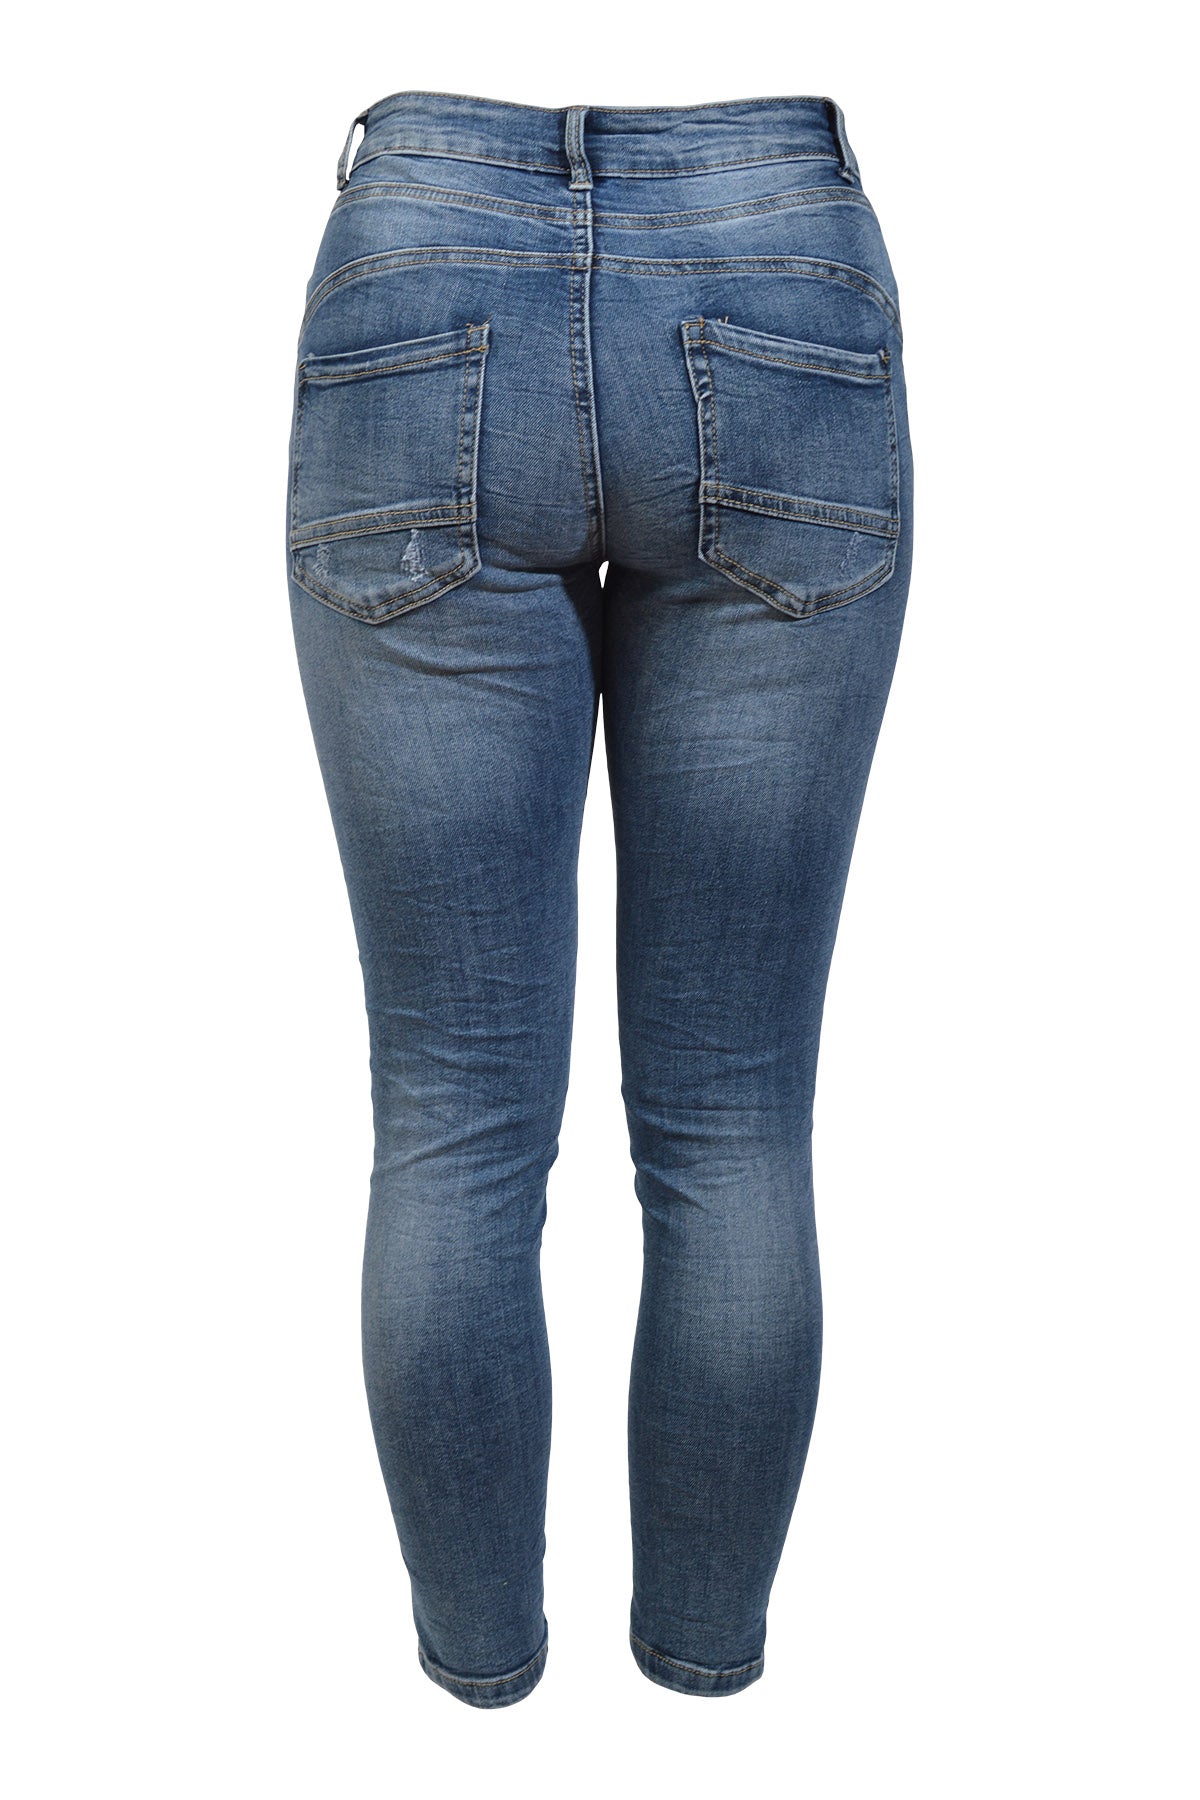 Piro jeans PB536, Jeans